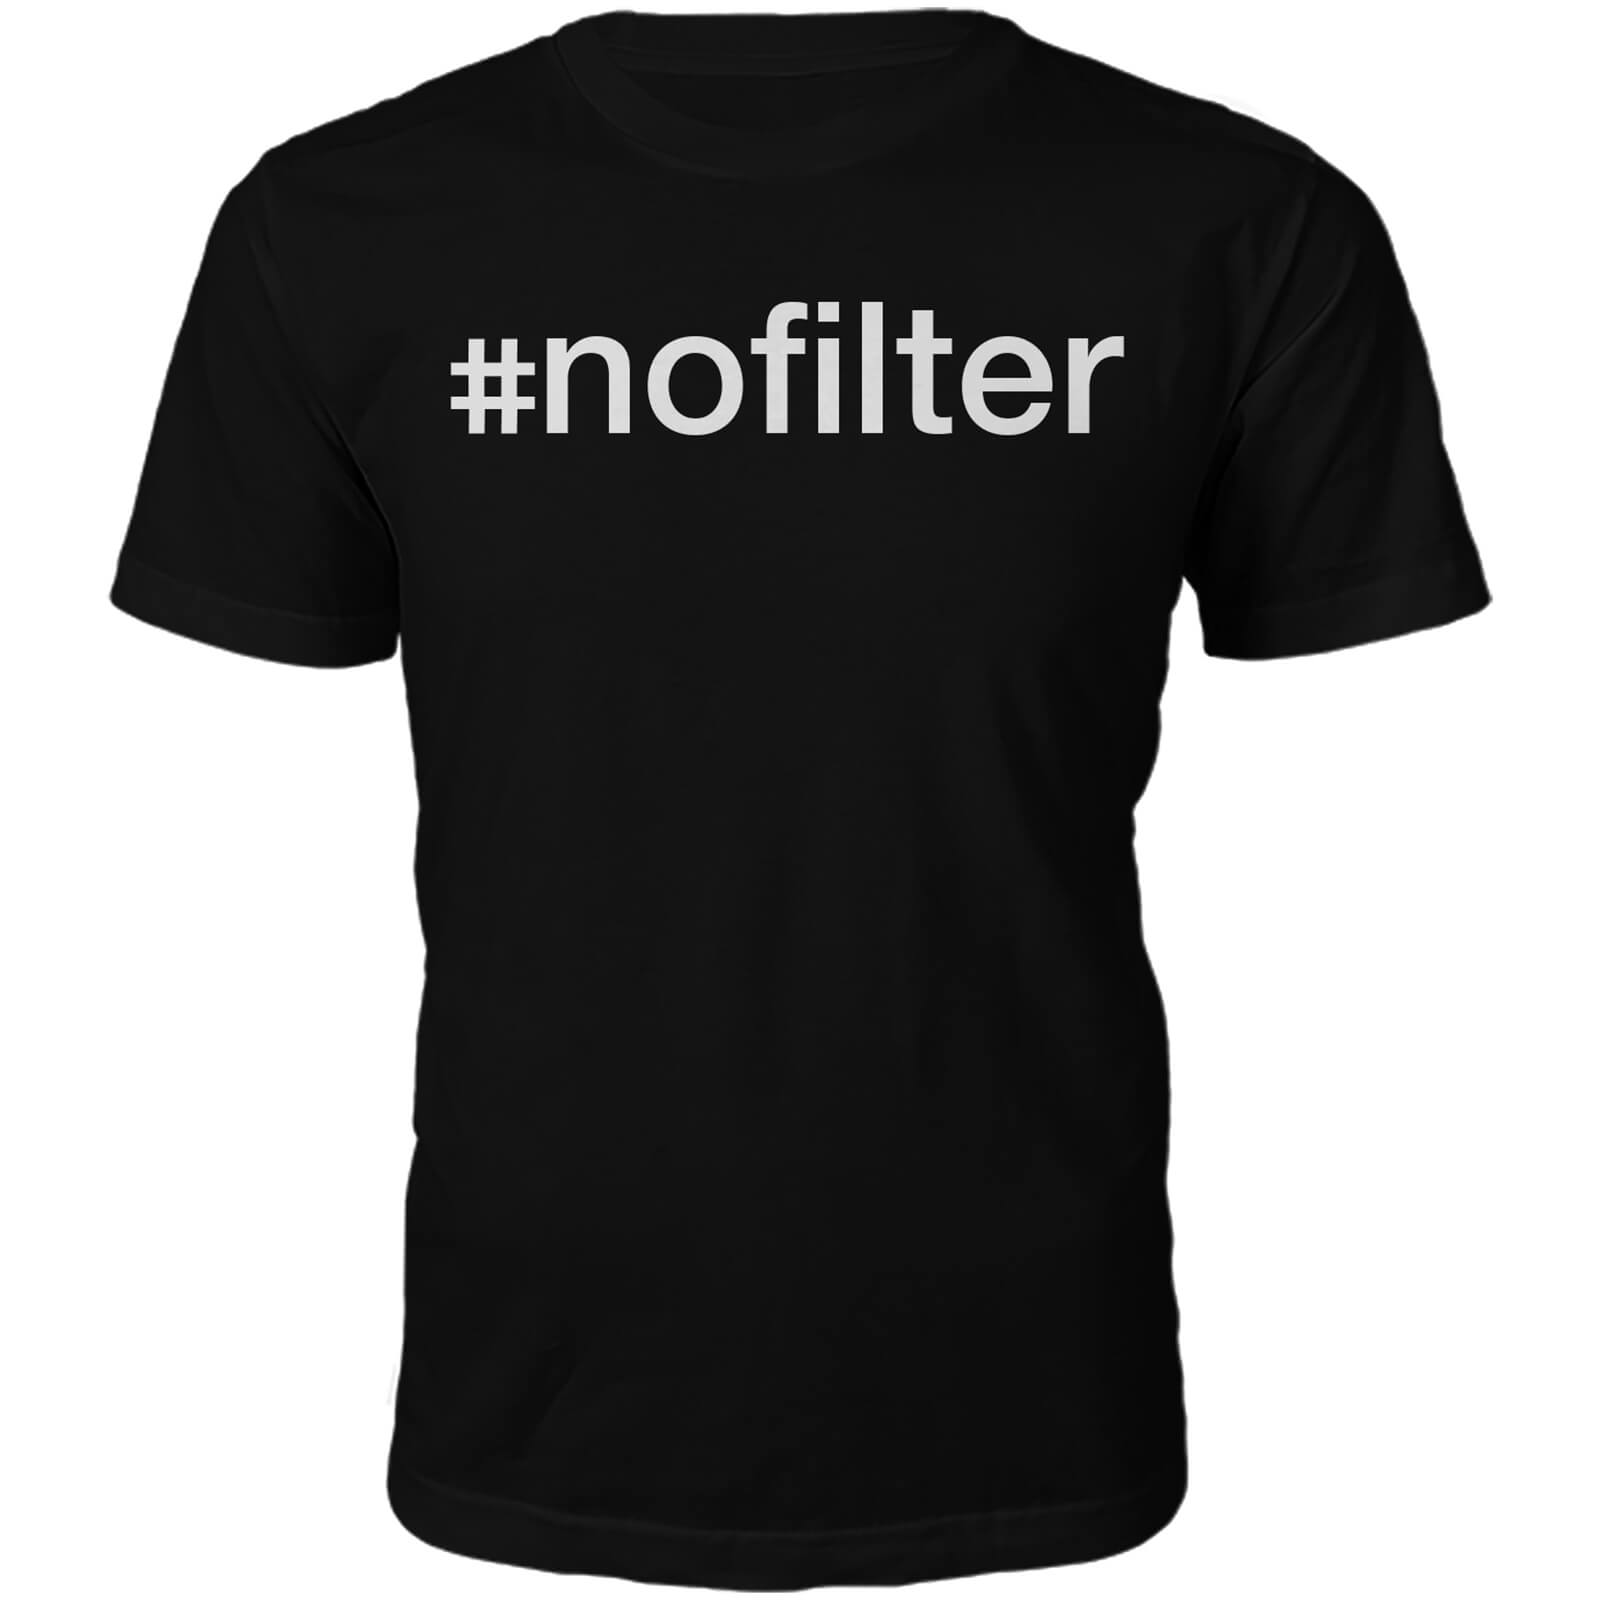 #Nofilter Slogan T-Shirt - Black - S - Black